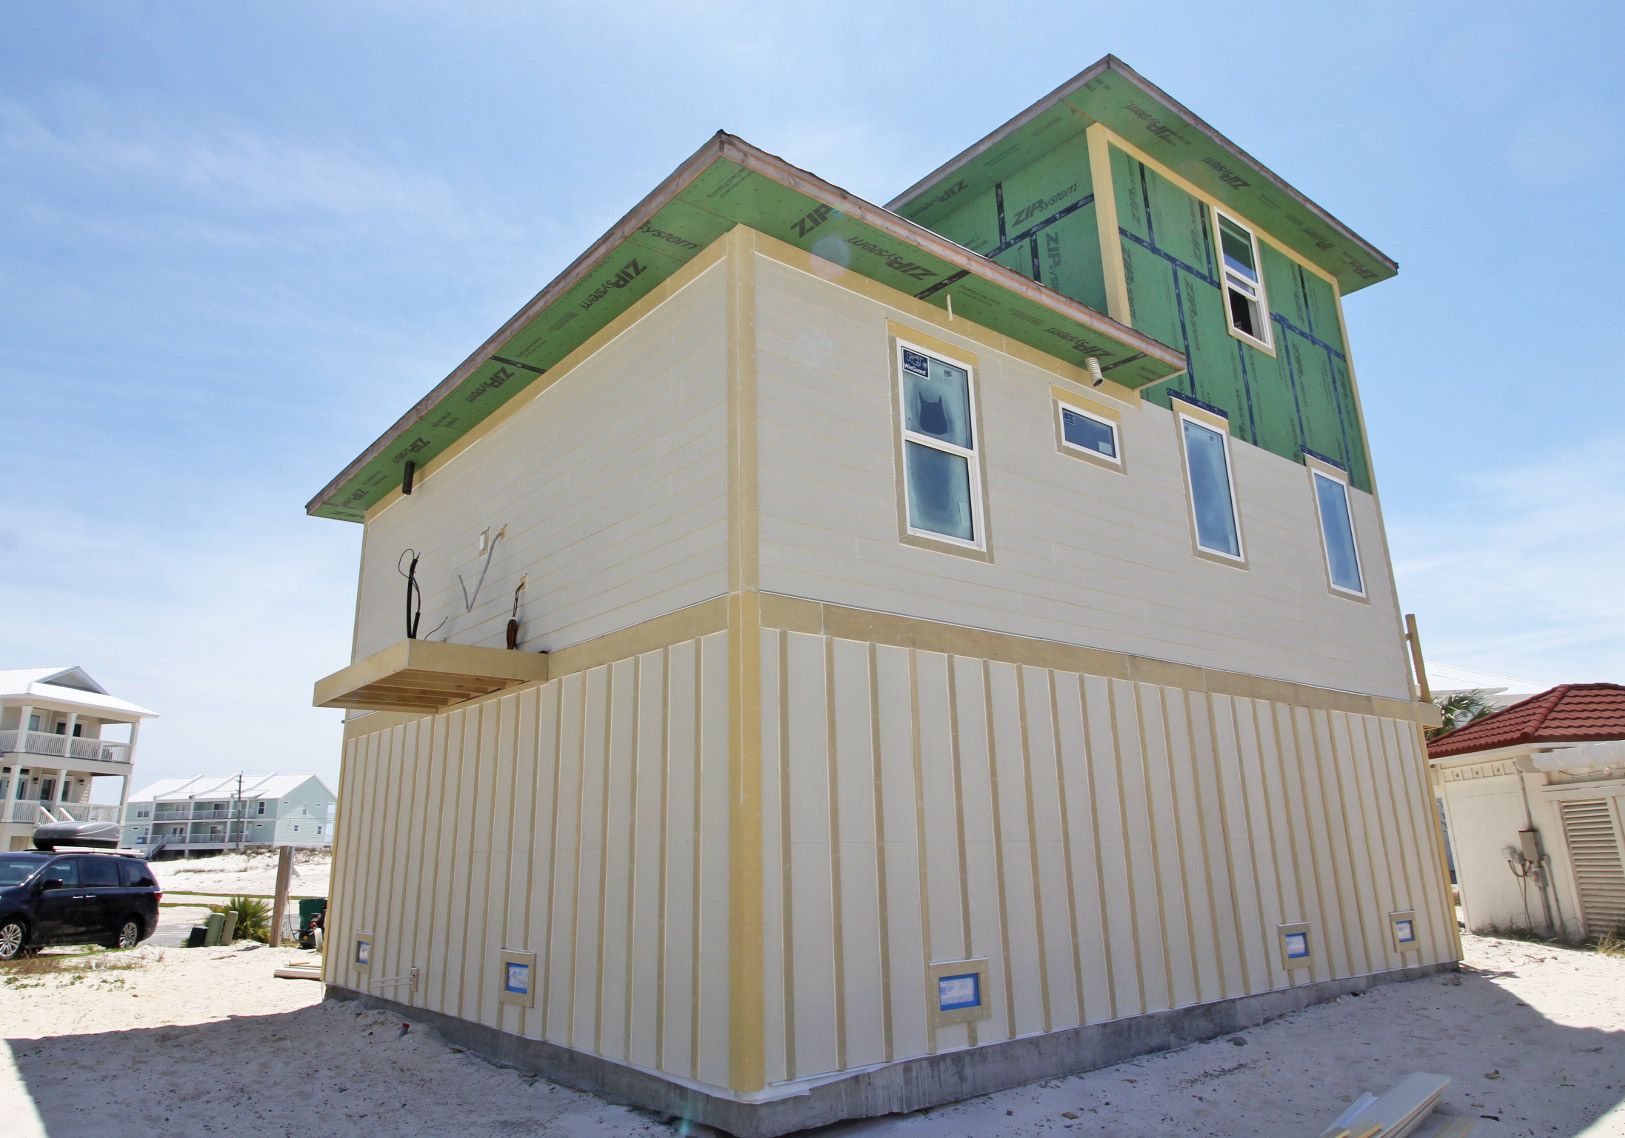 Slone modern coastal piling home on Navarre Beach by Acorn Fine Homes